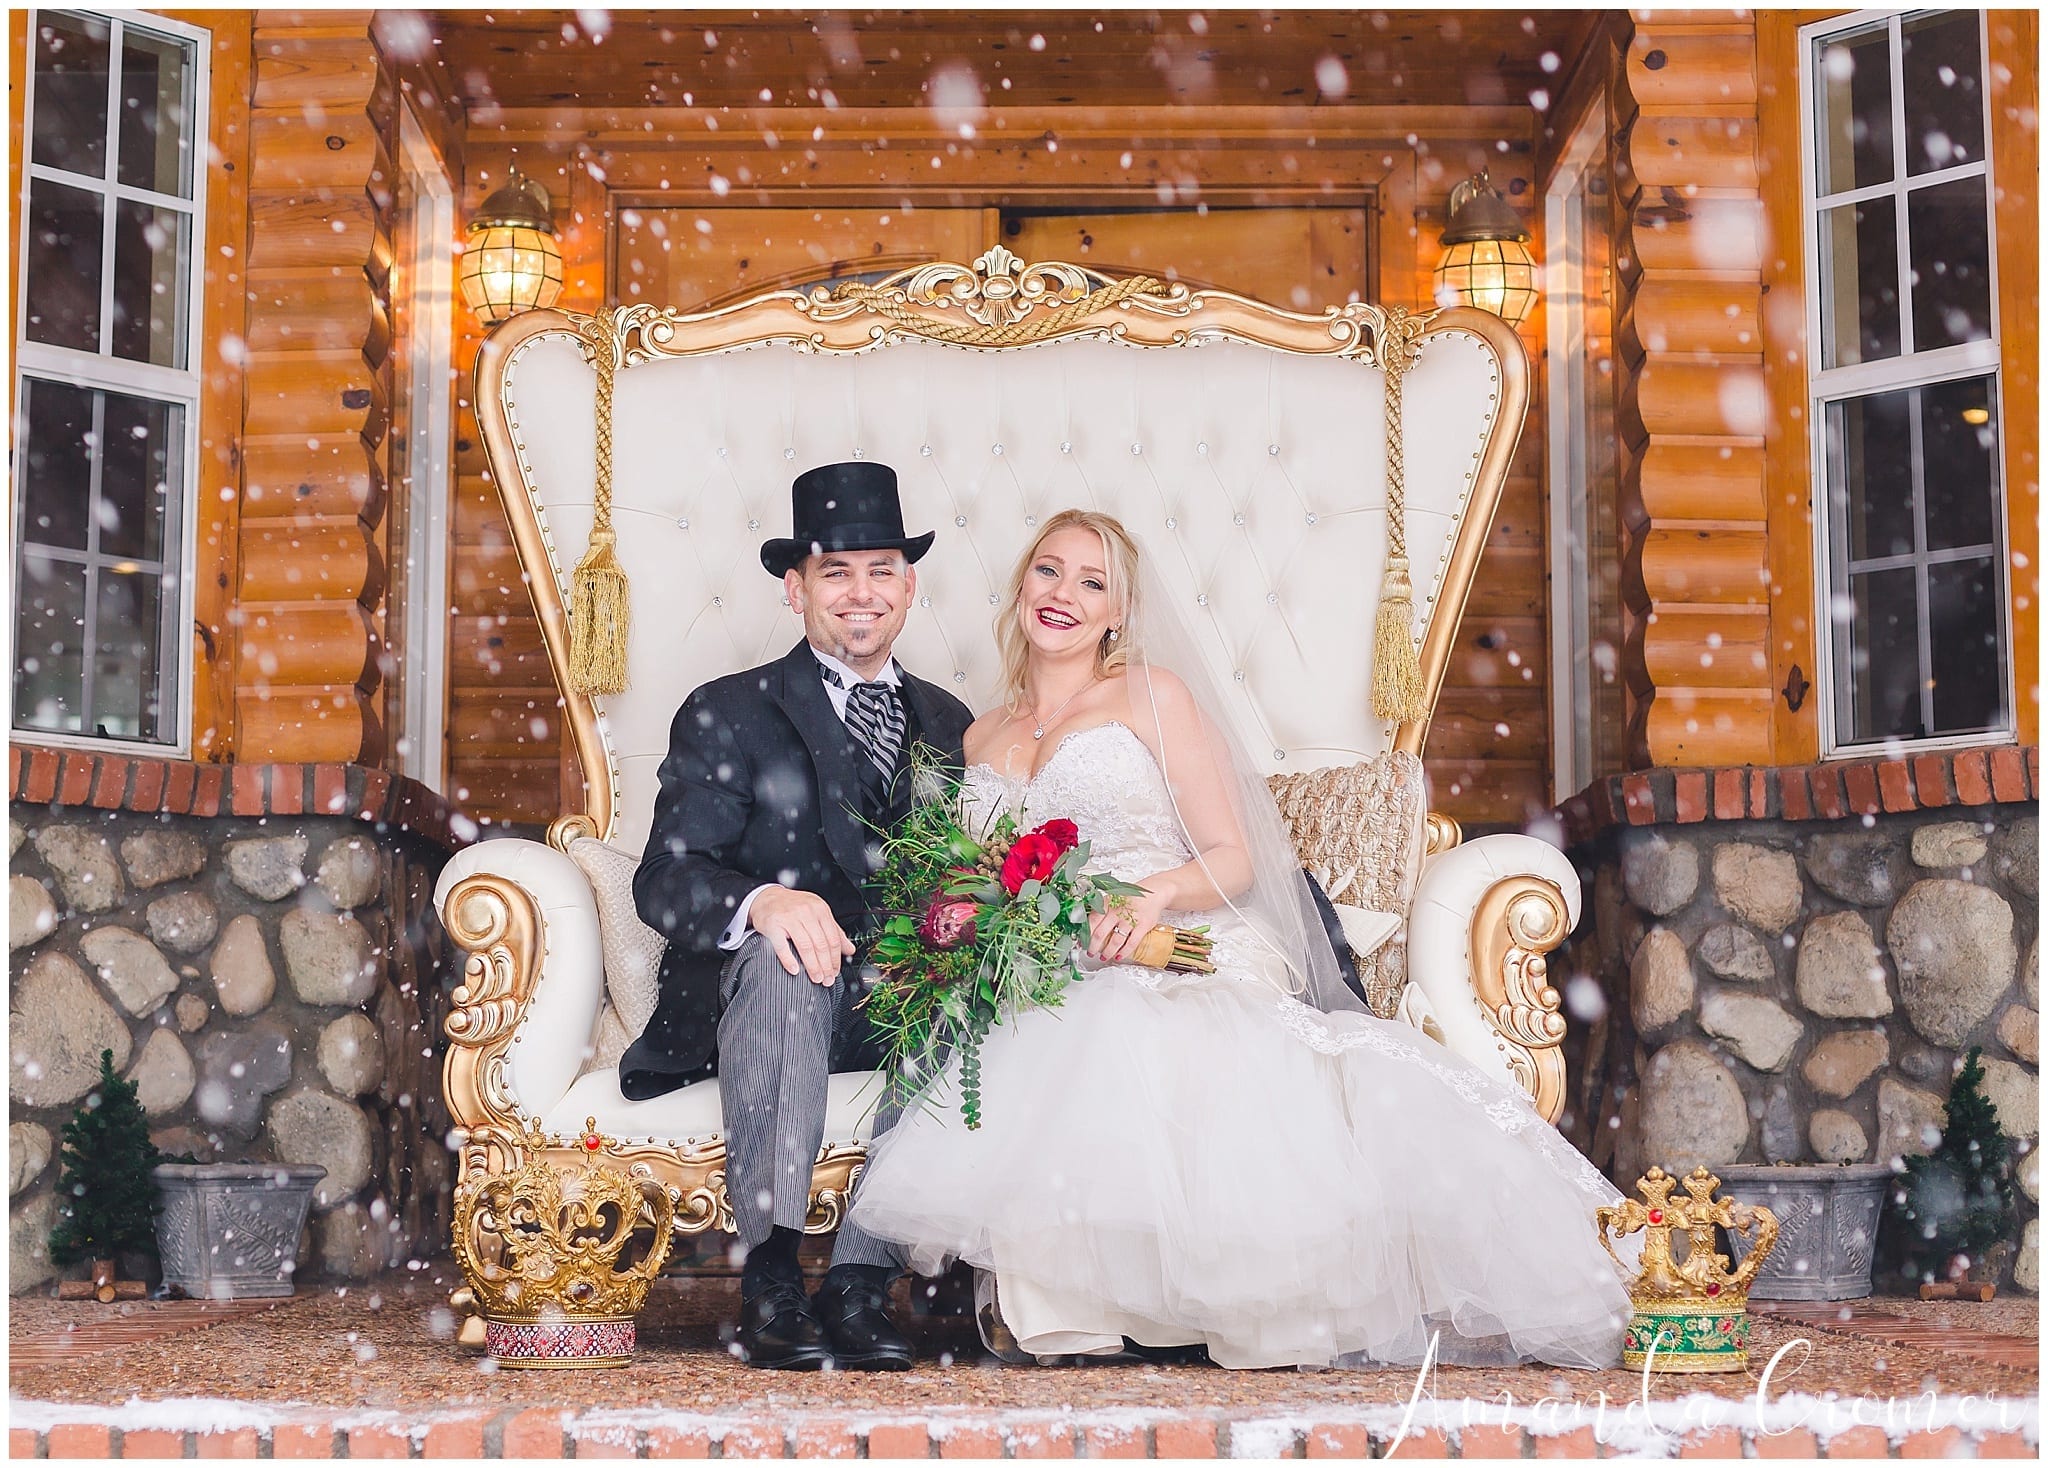  Snow Wedding | Narnia Themed Wedding | Couple Smiling